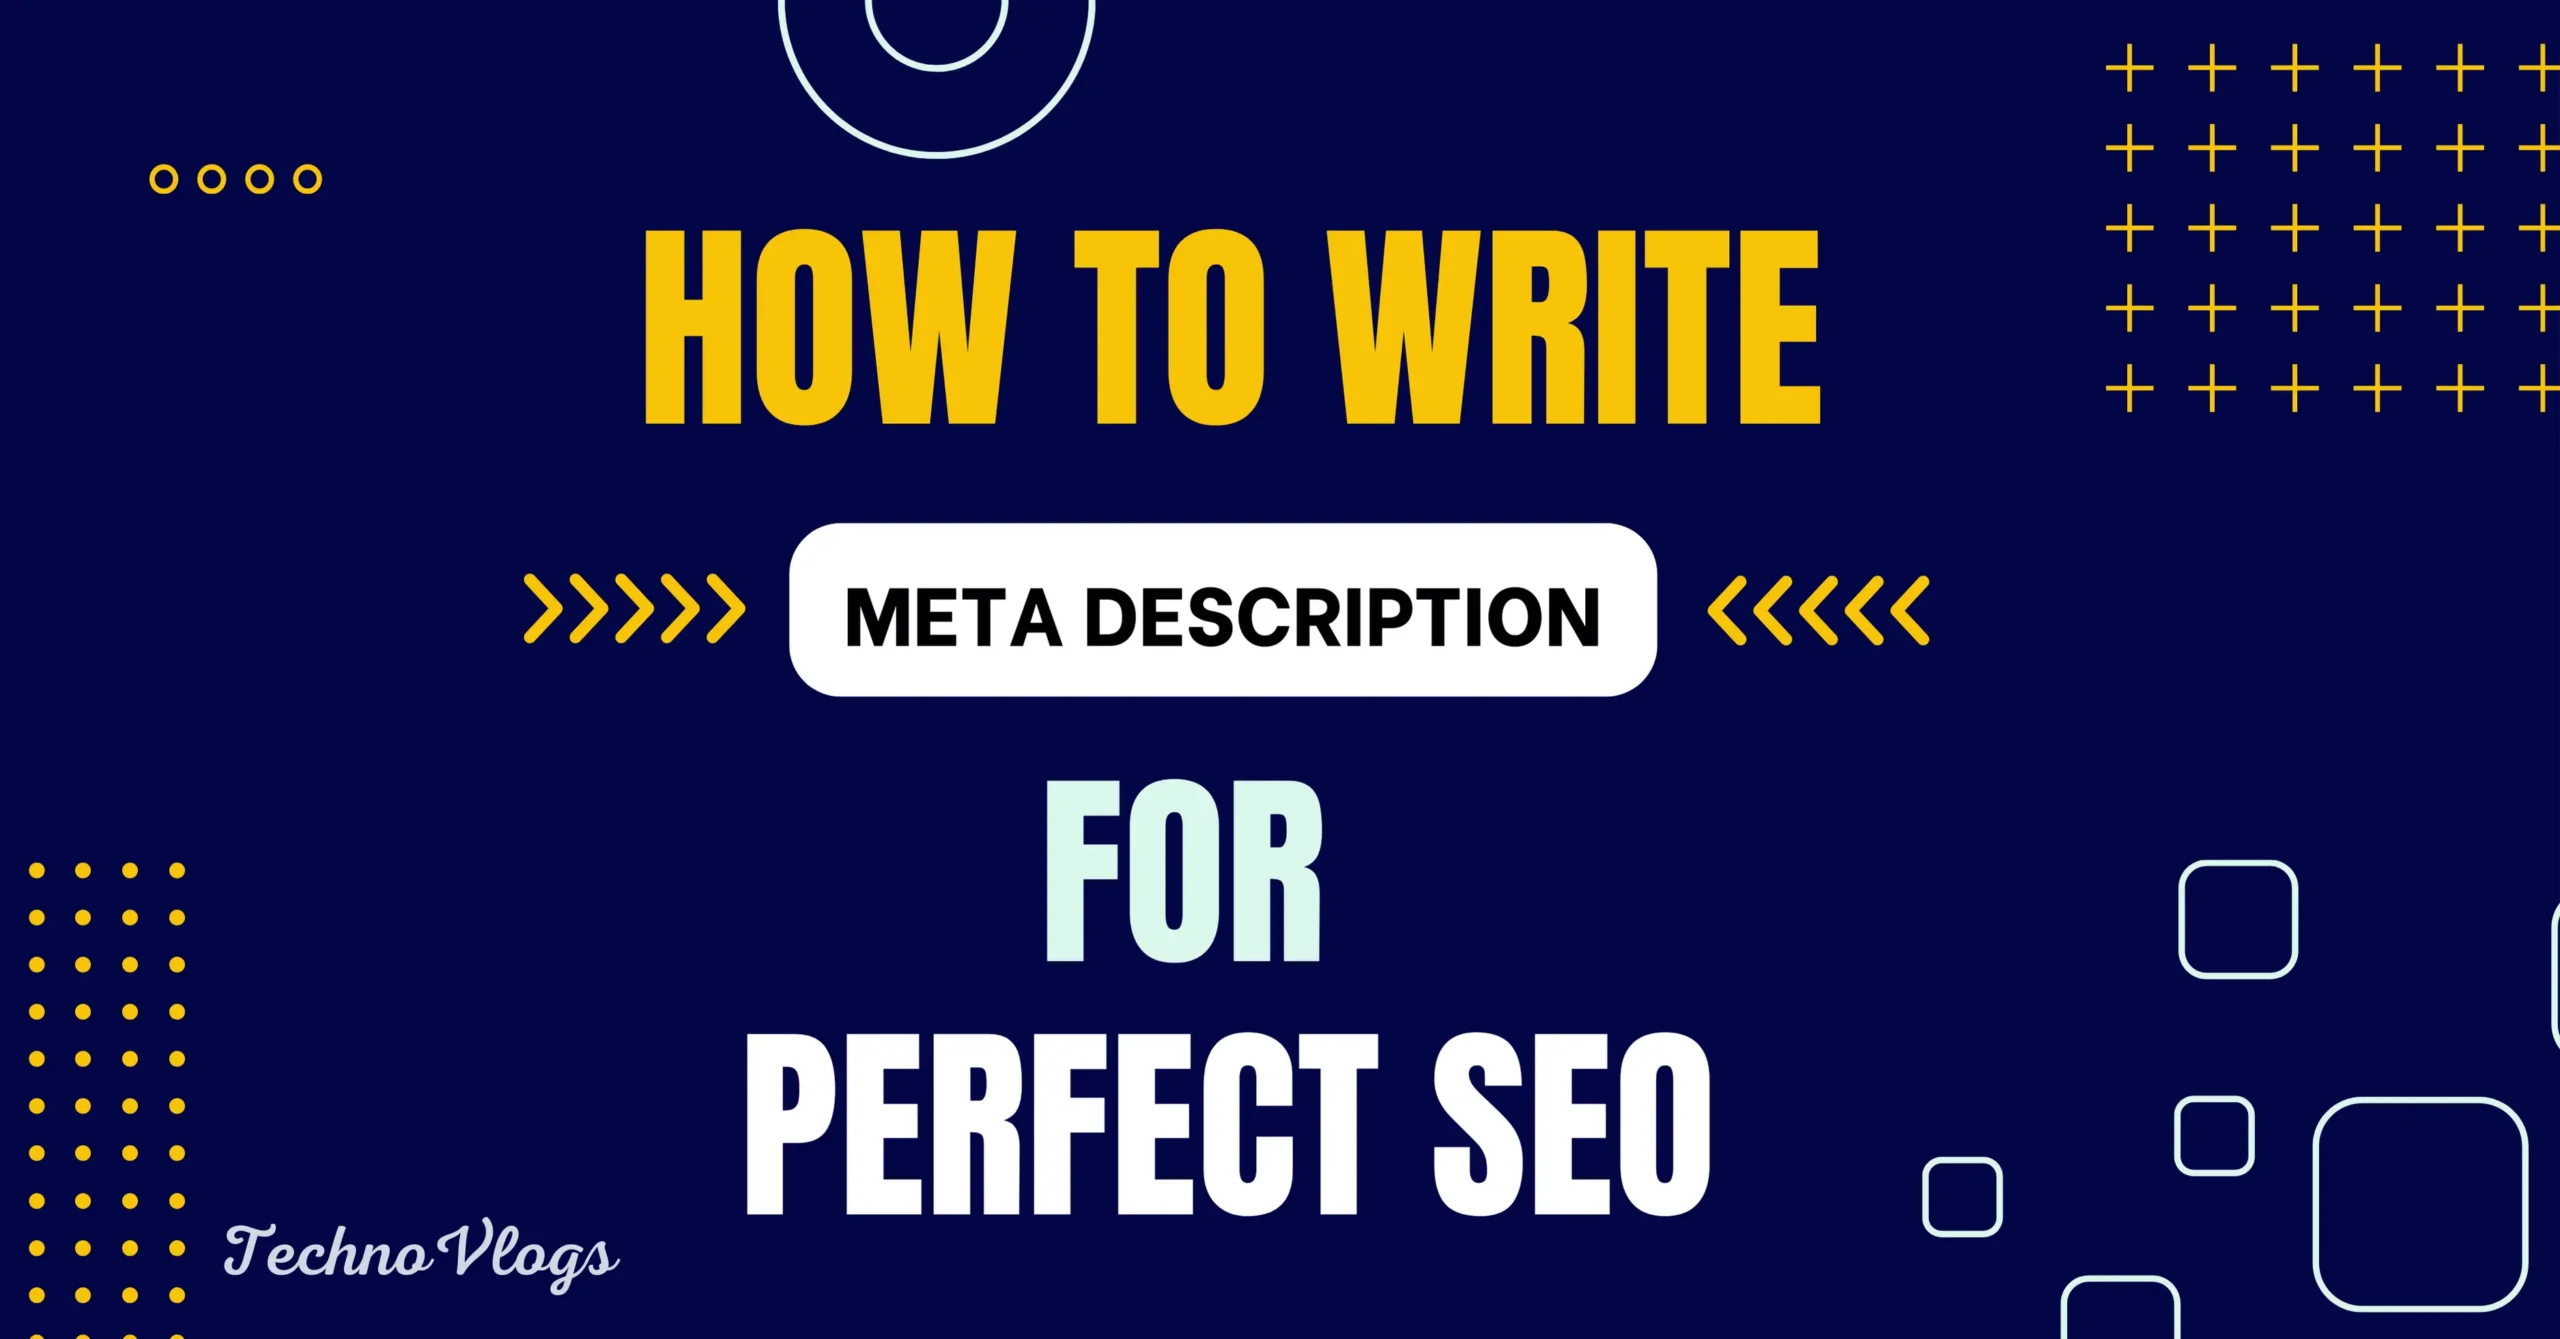 Meta Description Guide: How to Write for Perfect SEO